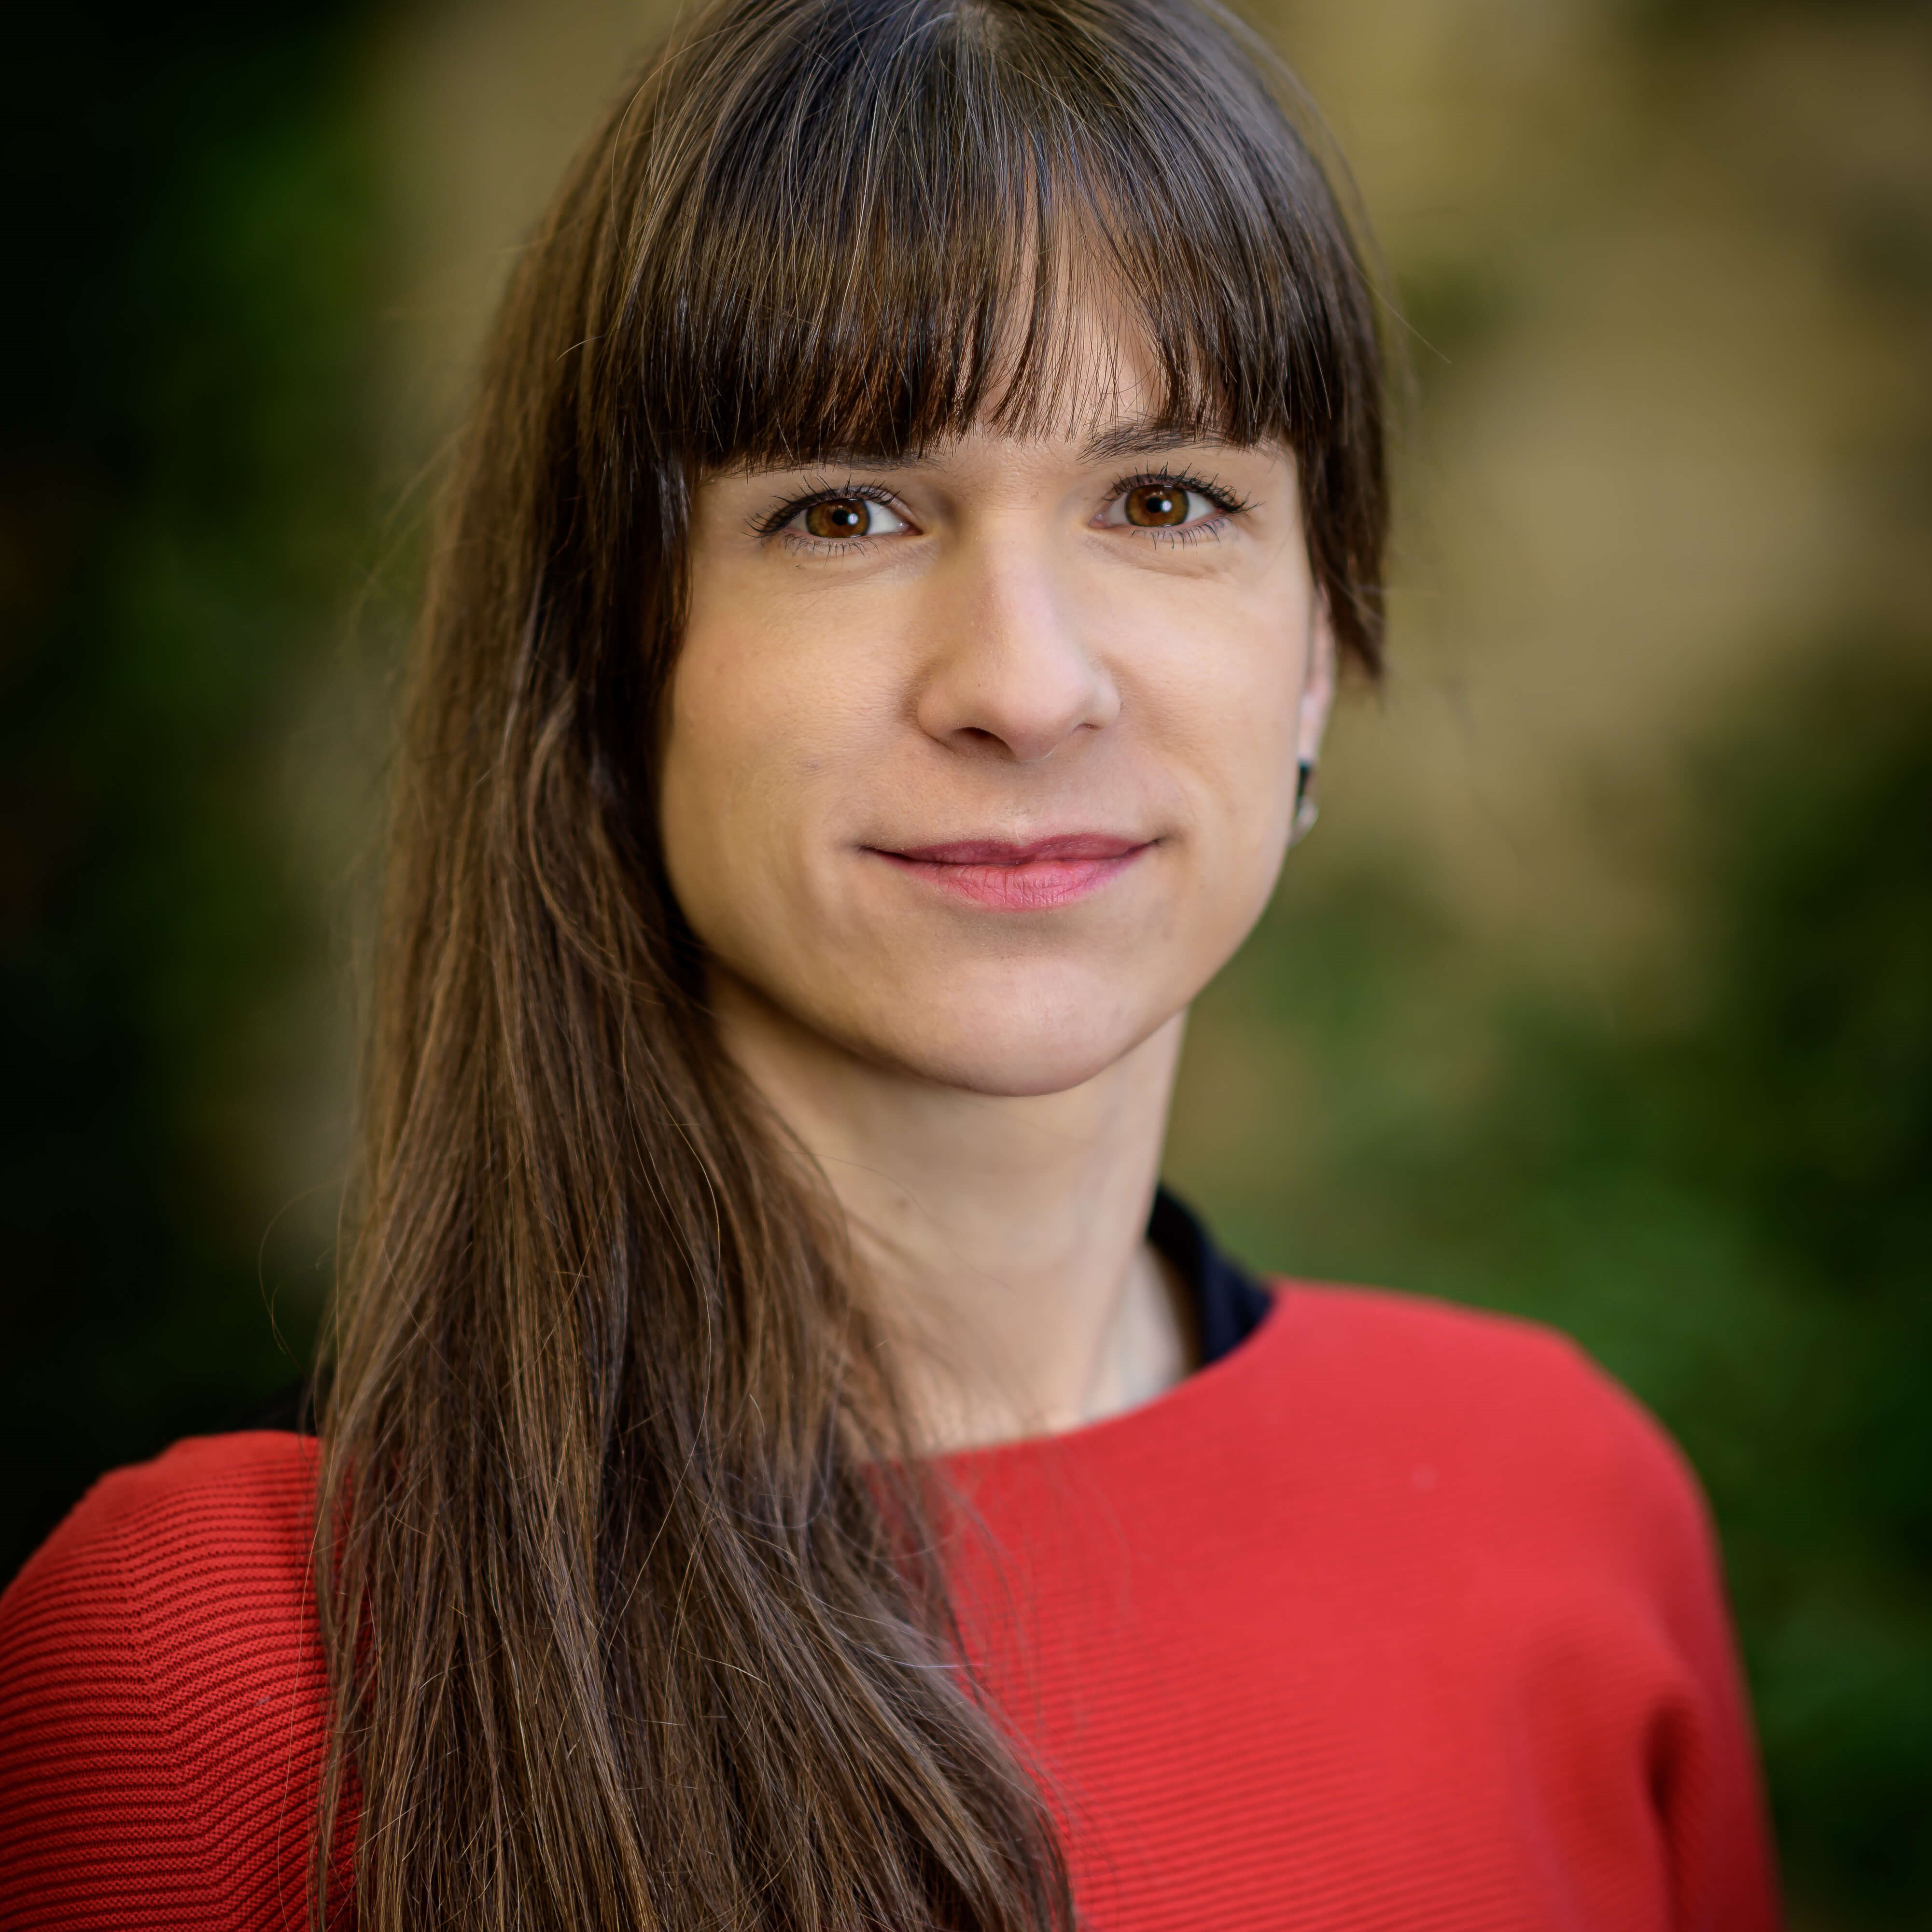 Profile image of Dr. Veronika Pehe